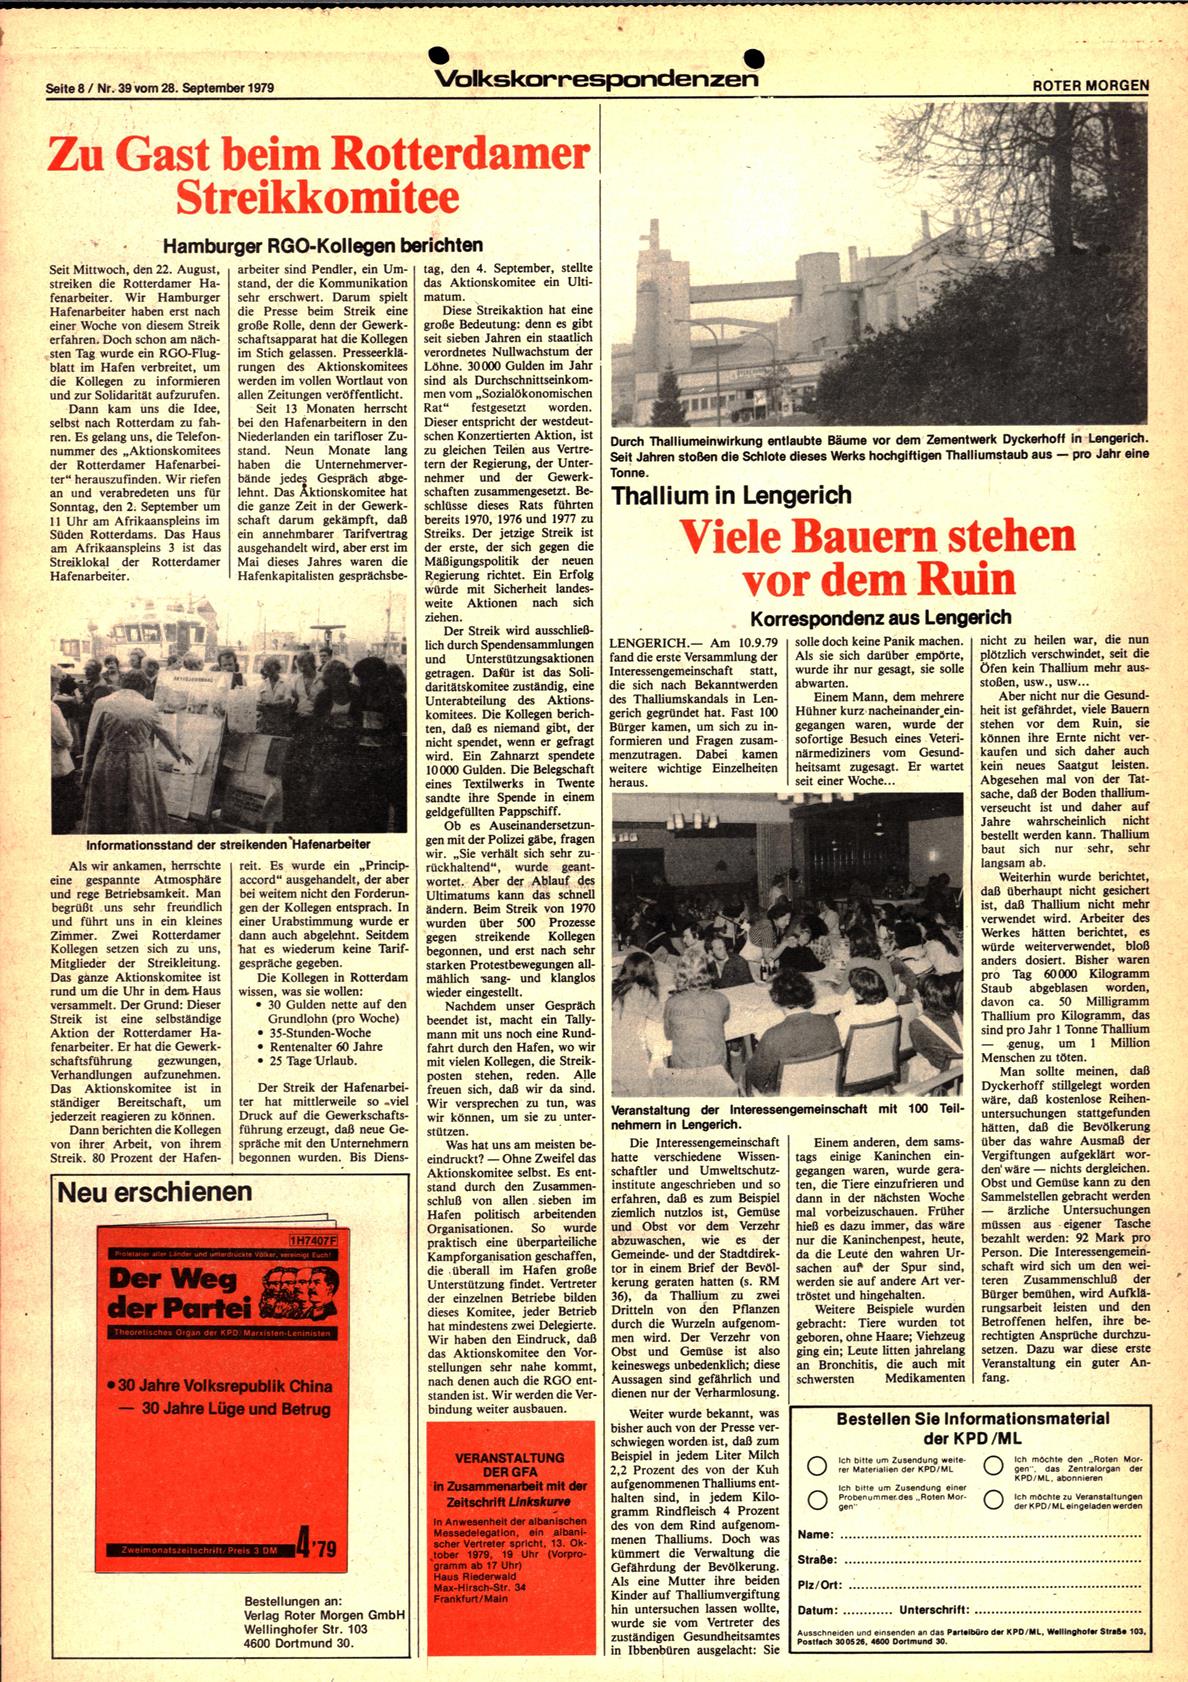 Roter Morgen, 13. Jg., 28. September 1979, Nr. 39, Seite 8